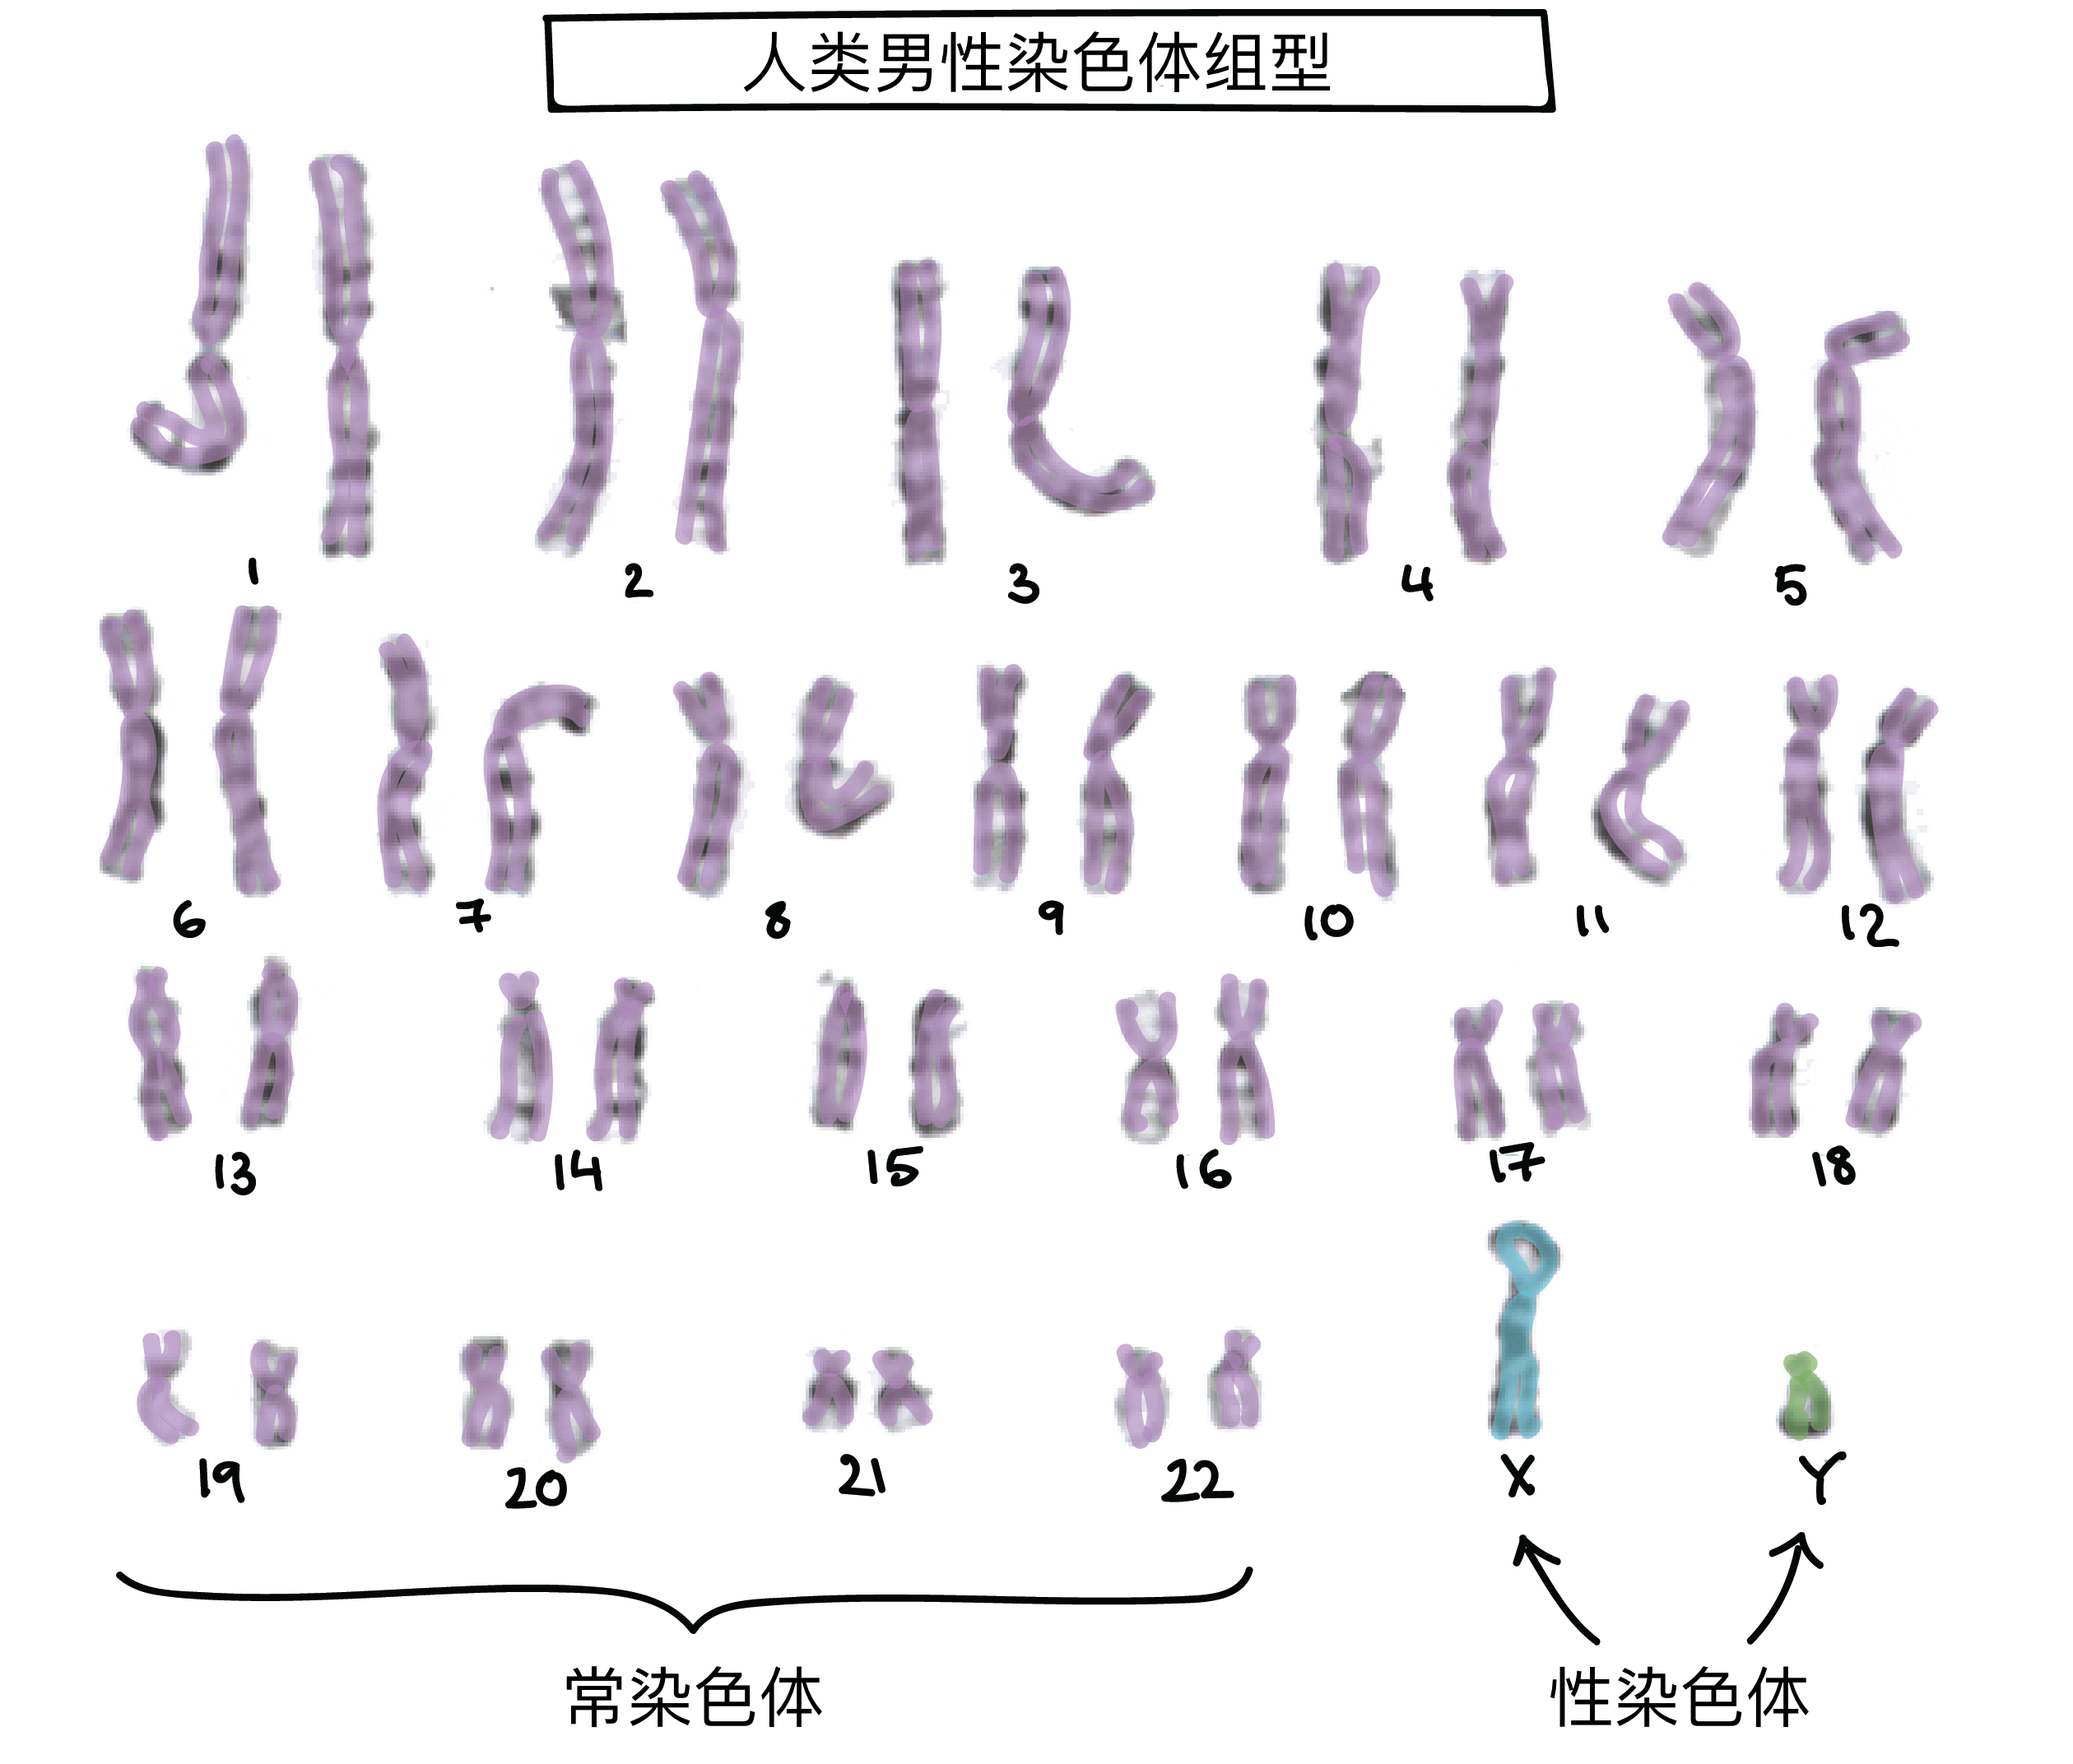 X 连锁遗传 文章 伴性遗传 染色体突变和非核遗传 可汗学院